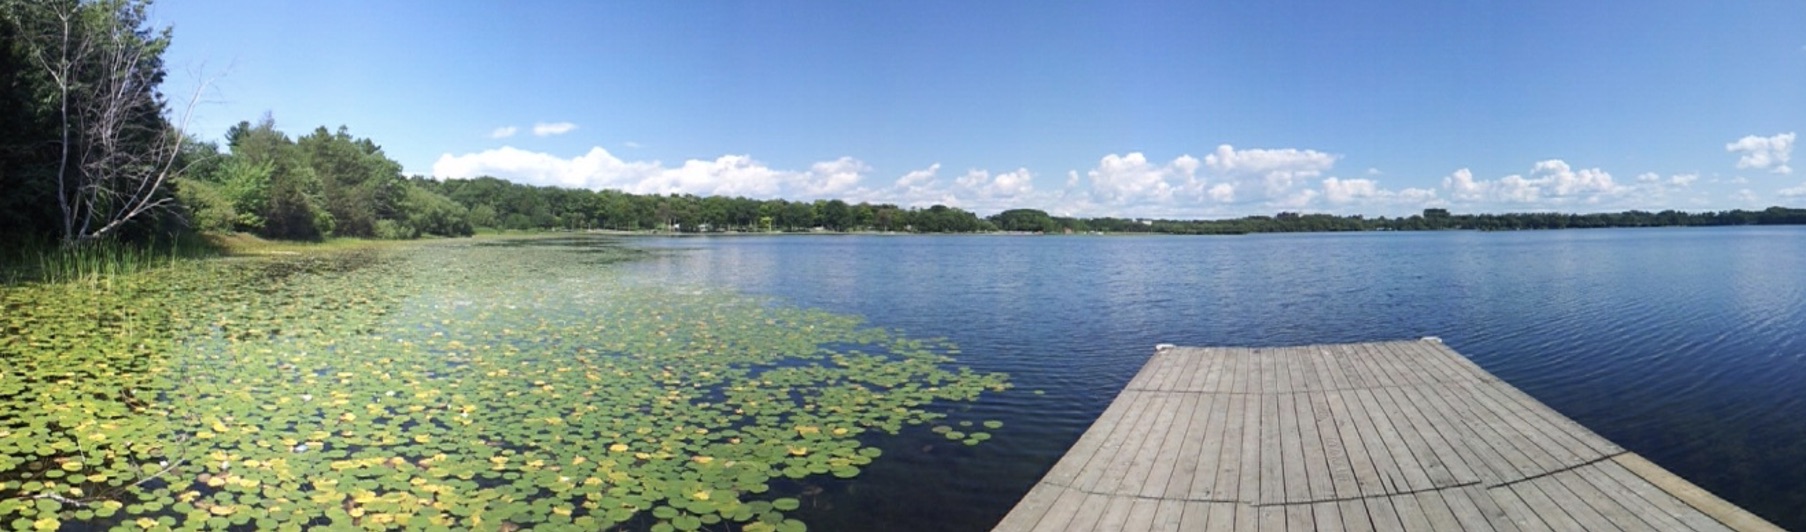 Scenic Dock on lake